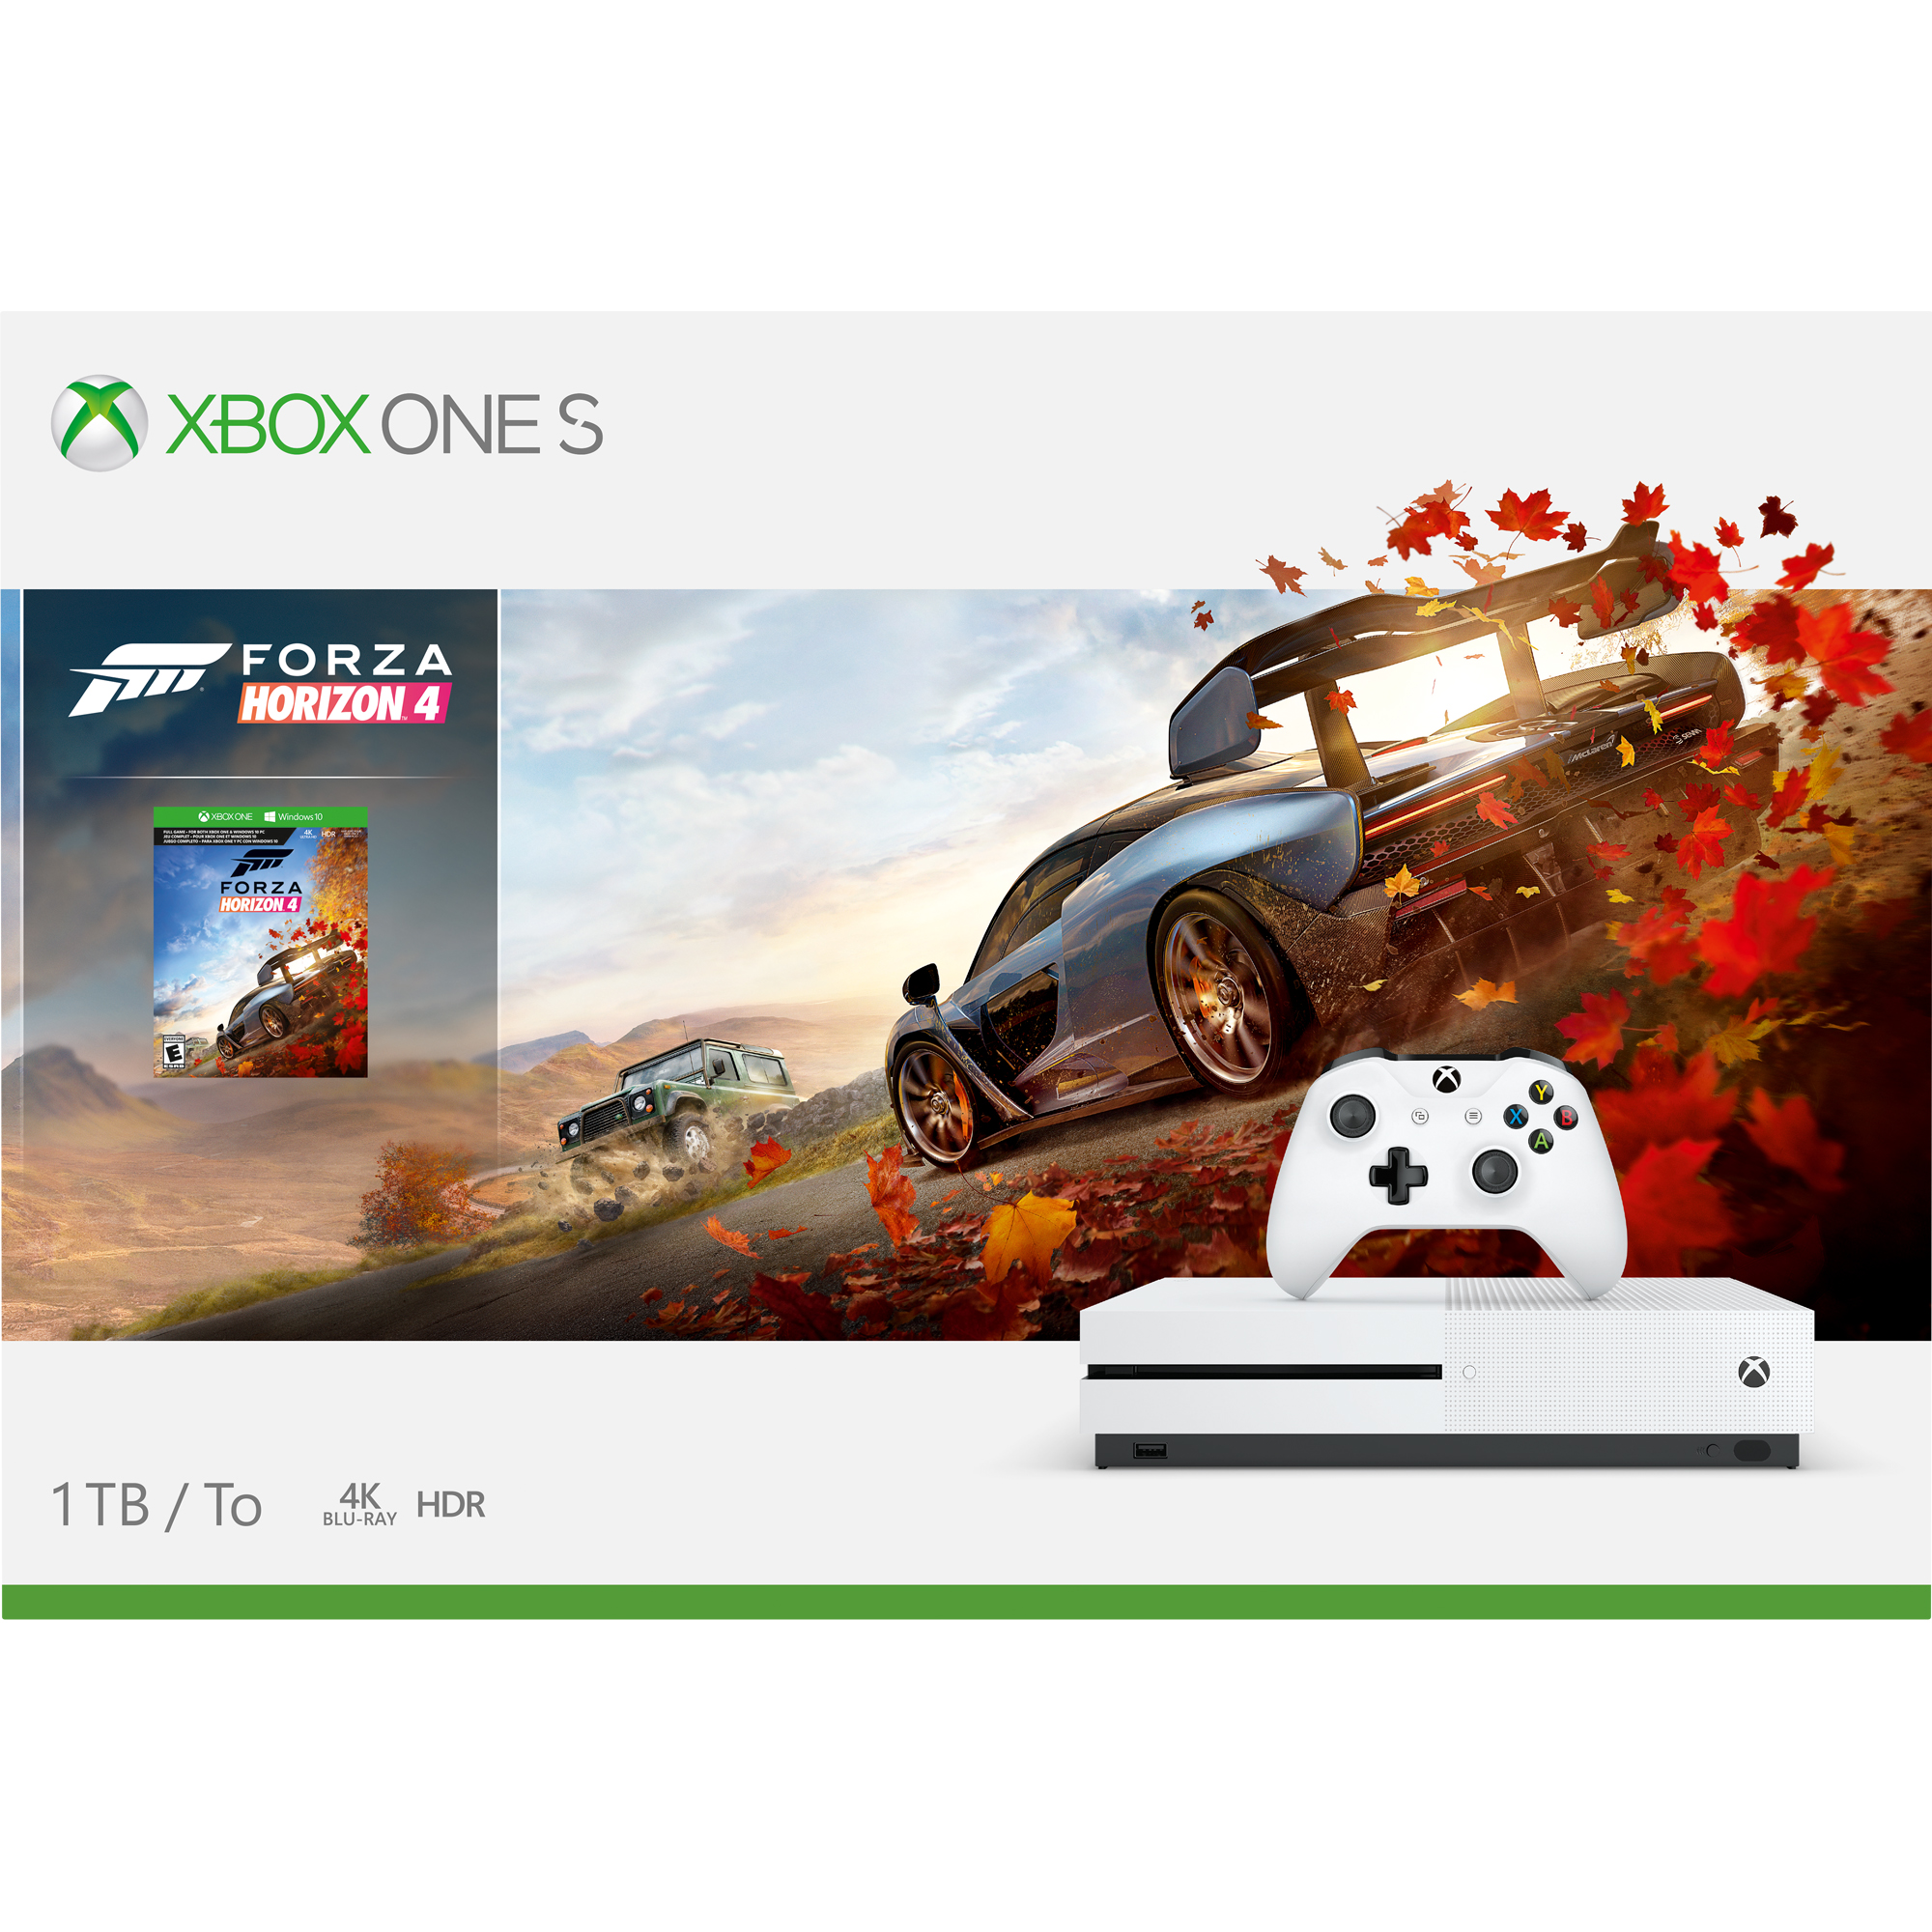 Xbox One S and Xbox One X Forza Horizon 4 Bundles